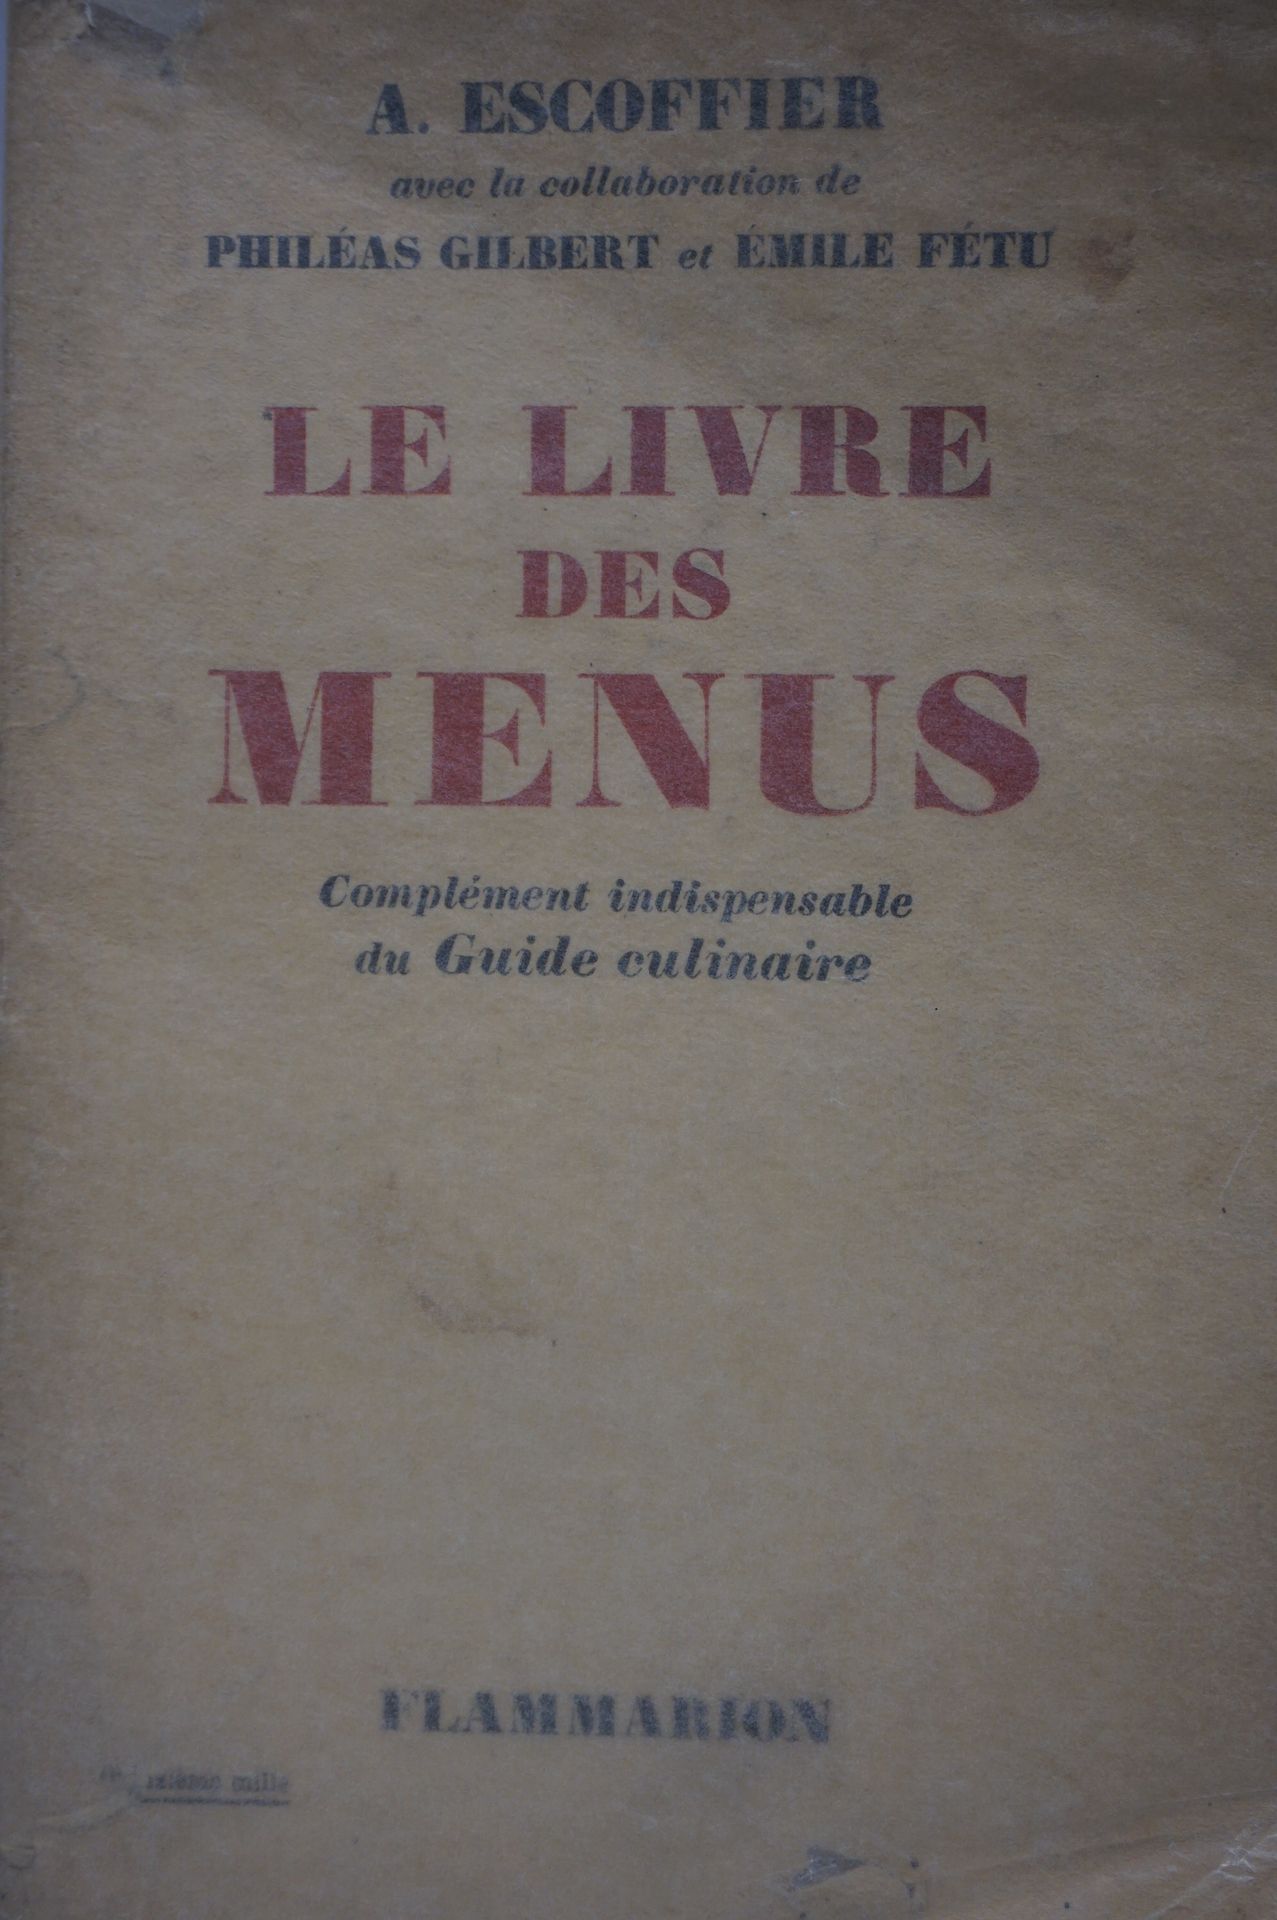 Null escoffier（A.）。菜单之书。烹饪指南不可缺少的补充。巴黎，Flammarion，s.D.，in-8，br.封面（破损，书脊分离，撕裂）。